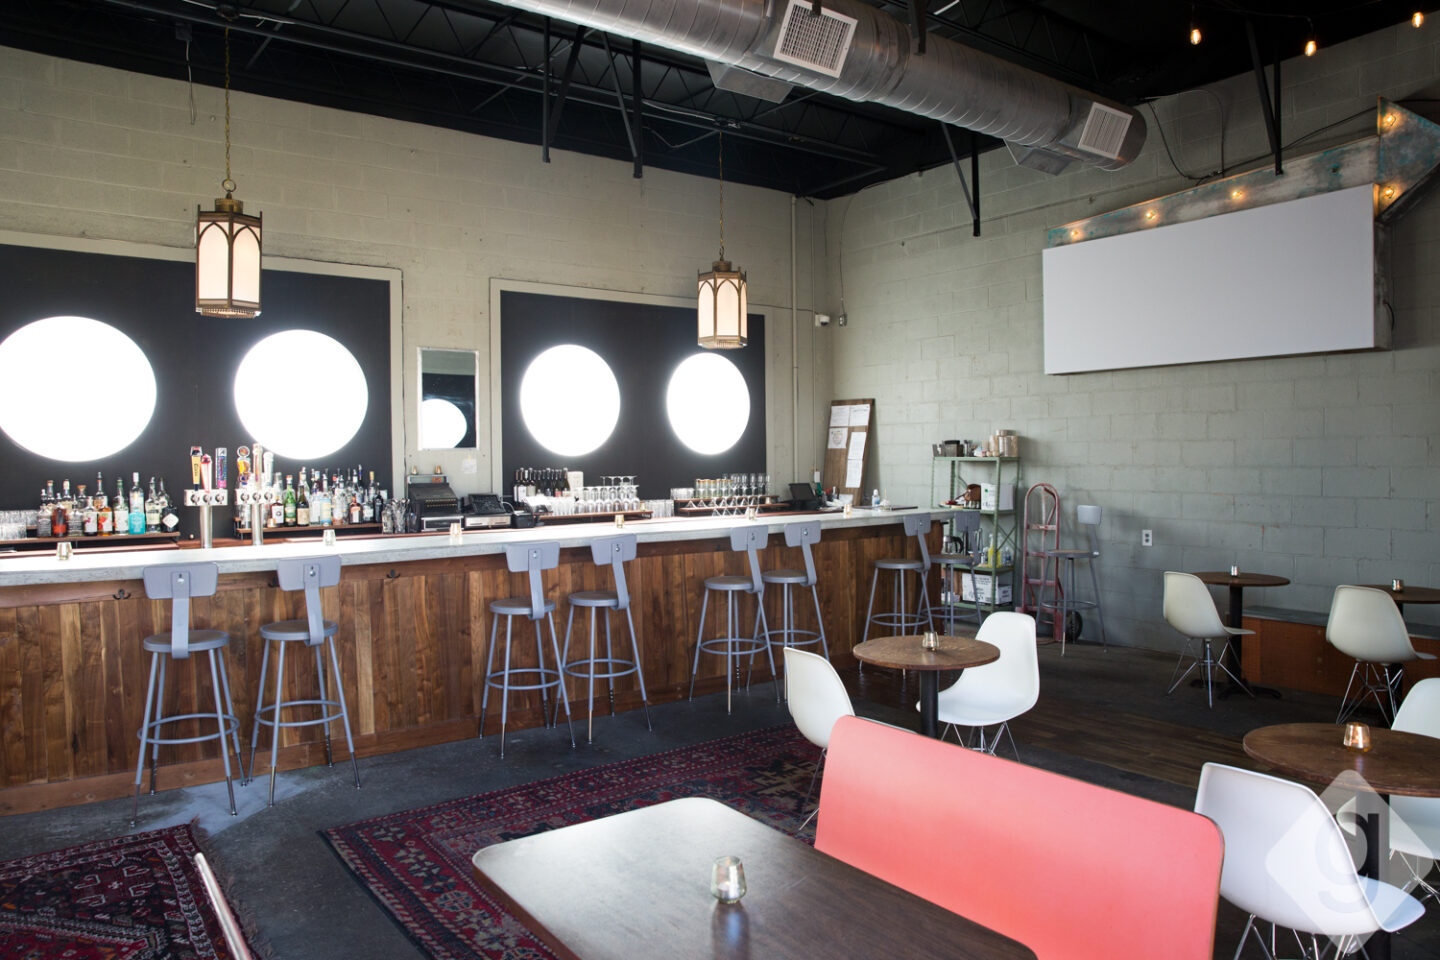 A Look Inside: Bar | Nashville